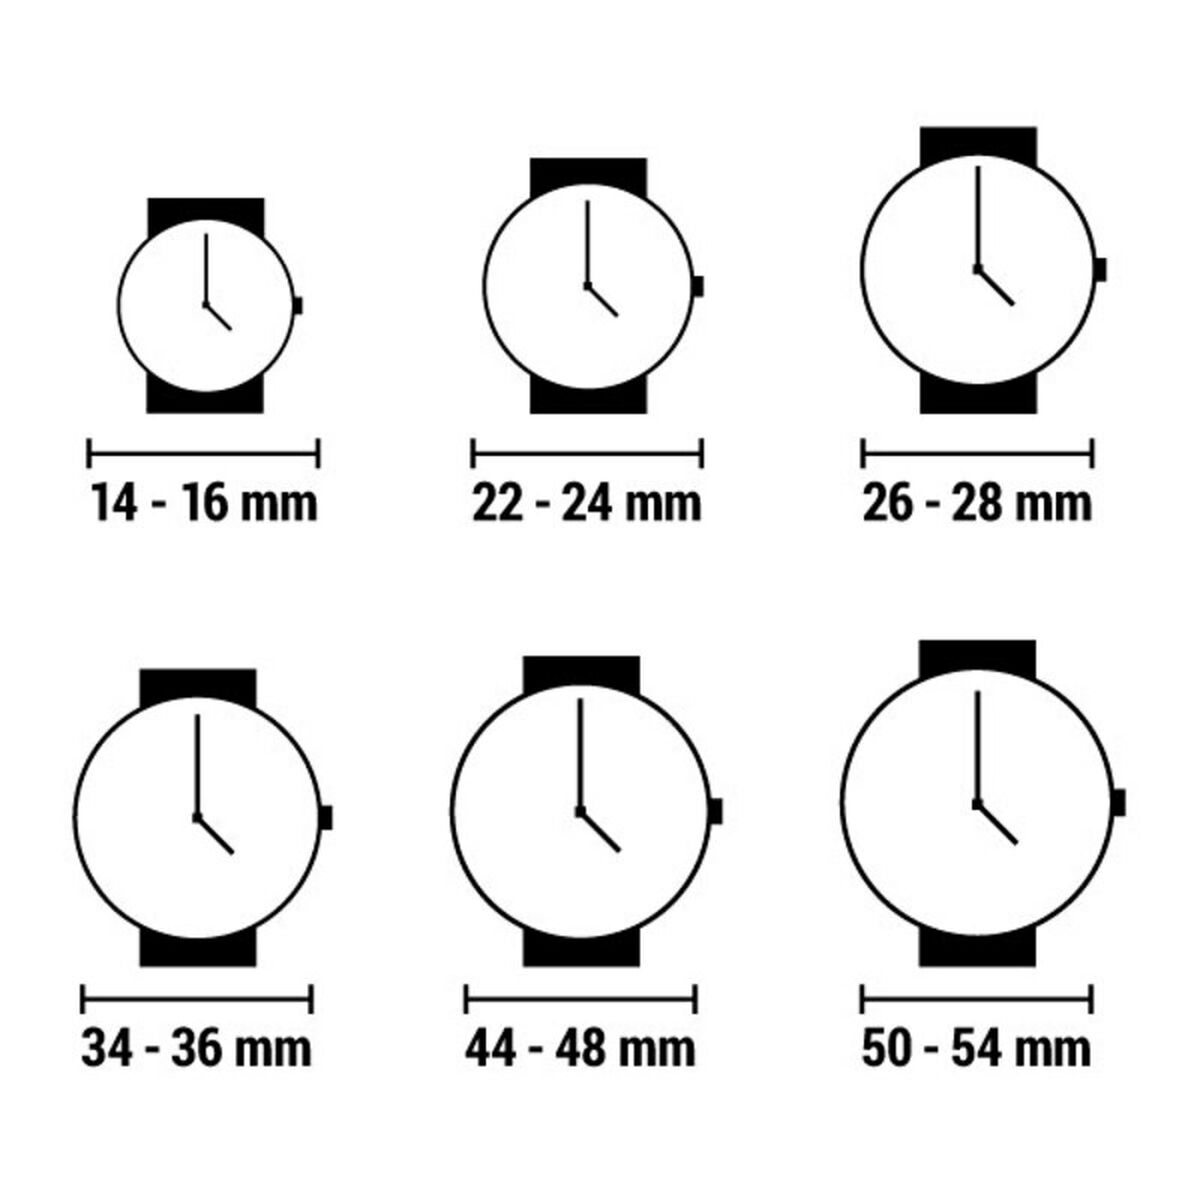 Horloge Dames Furla R4253102505 (Ø 38 mm)